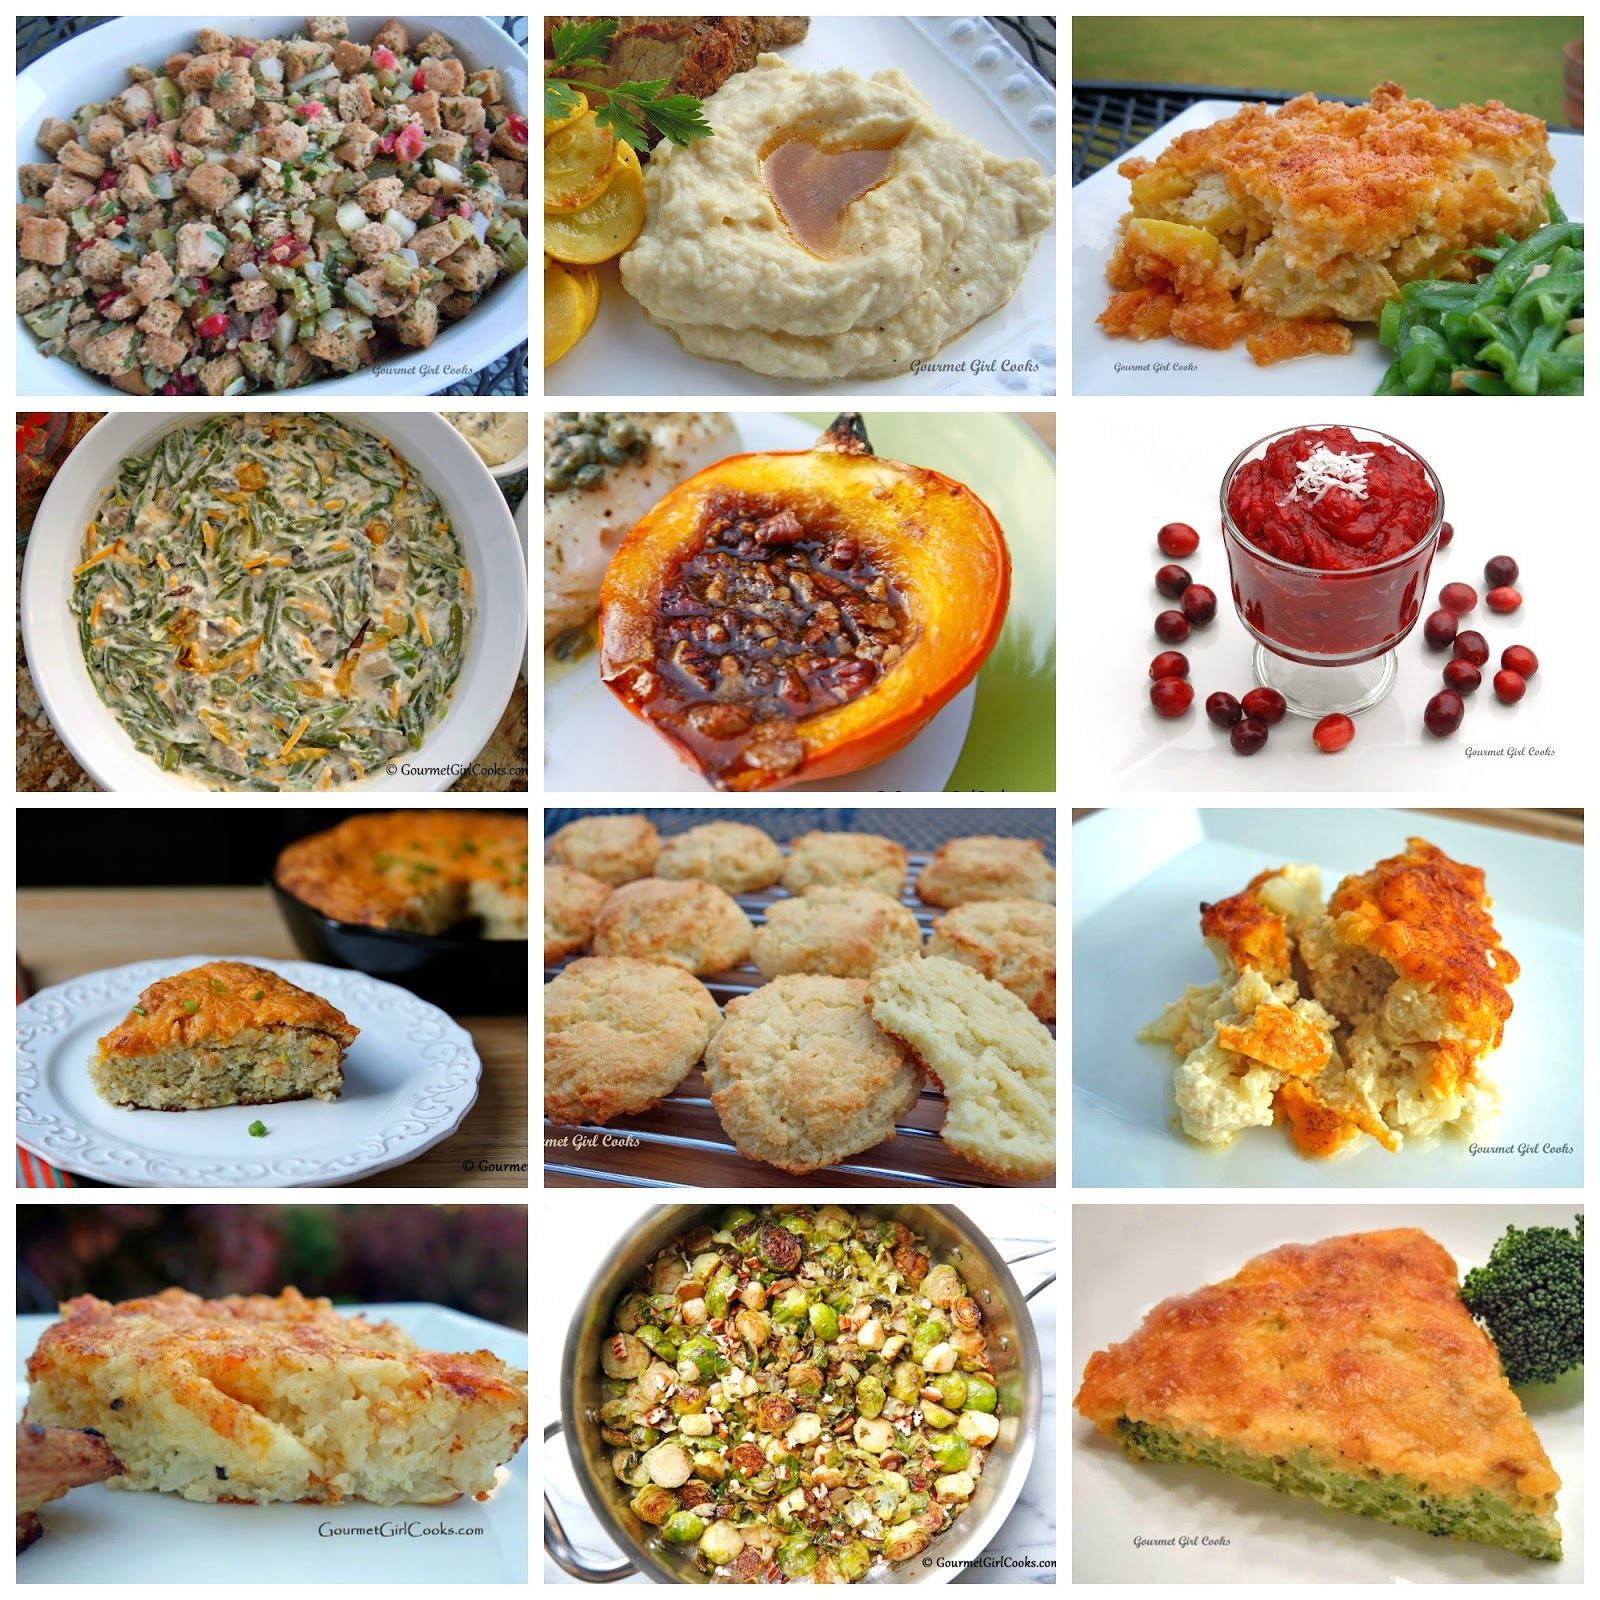 Gourmet Thanksgiving Side Dishes
 Gourmet Girl Cooks 12 Thanksgiving Side Dish Recipes